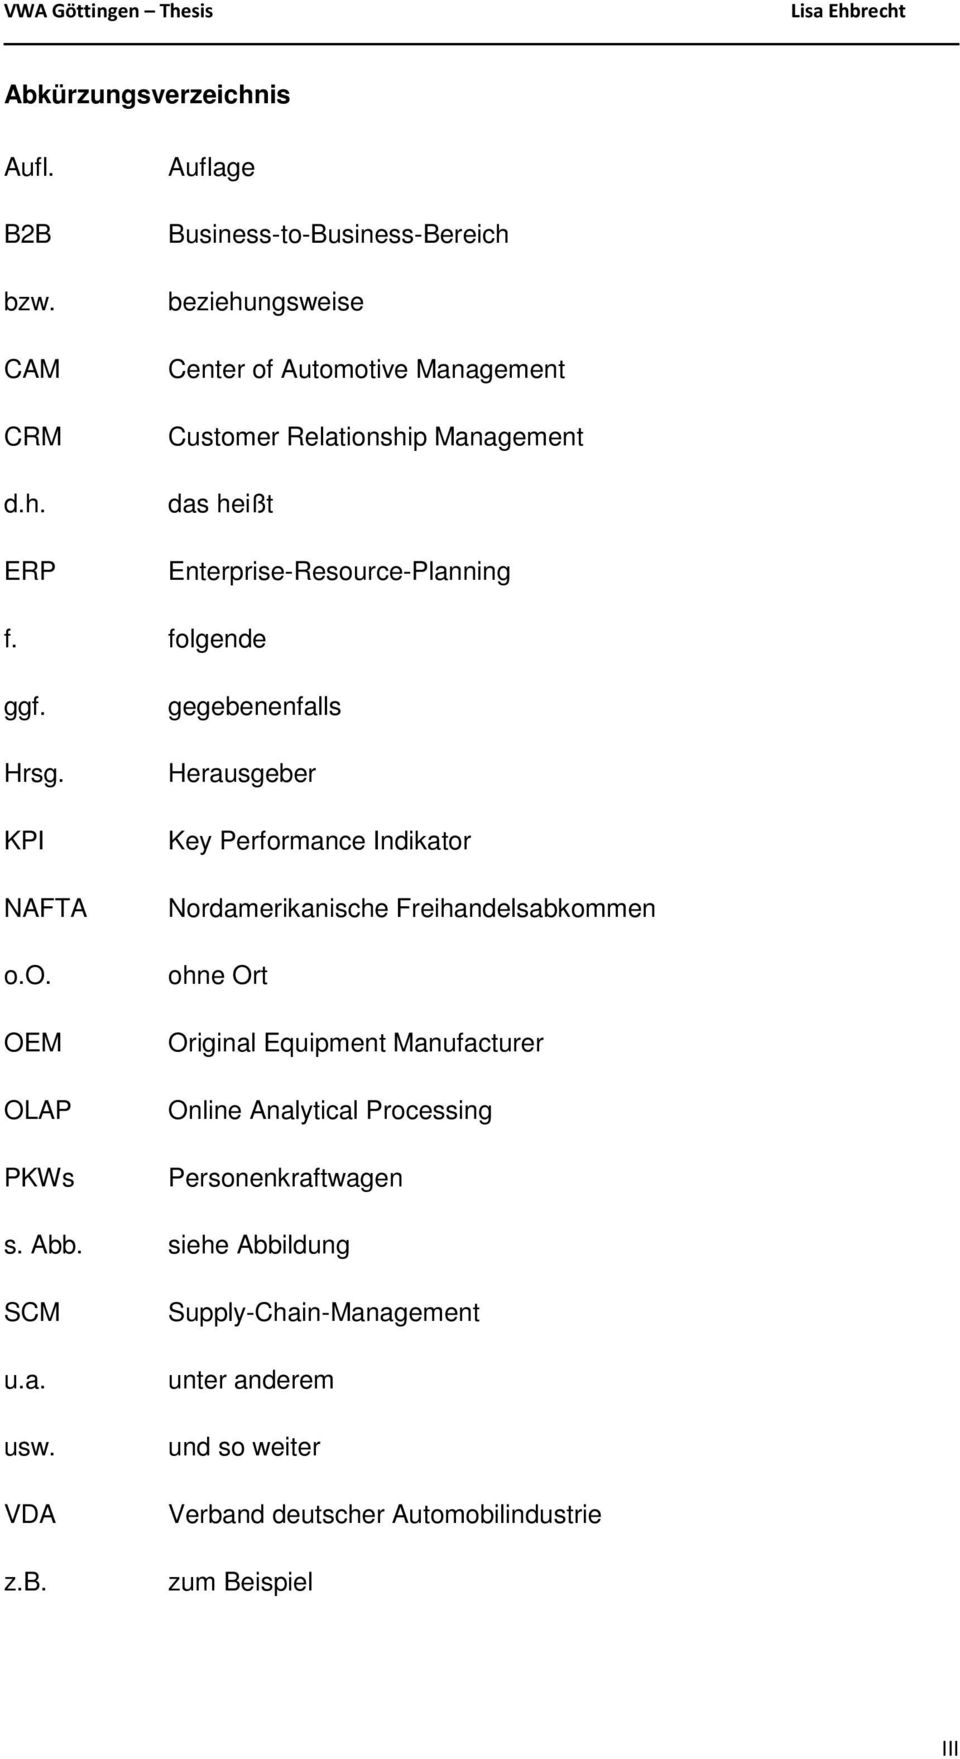 ERP Auflage Business-to-Business-Bereich beziehungsweise Center of Automotive Management Customer Relationship Management das heißt